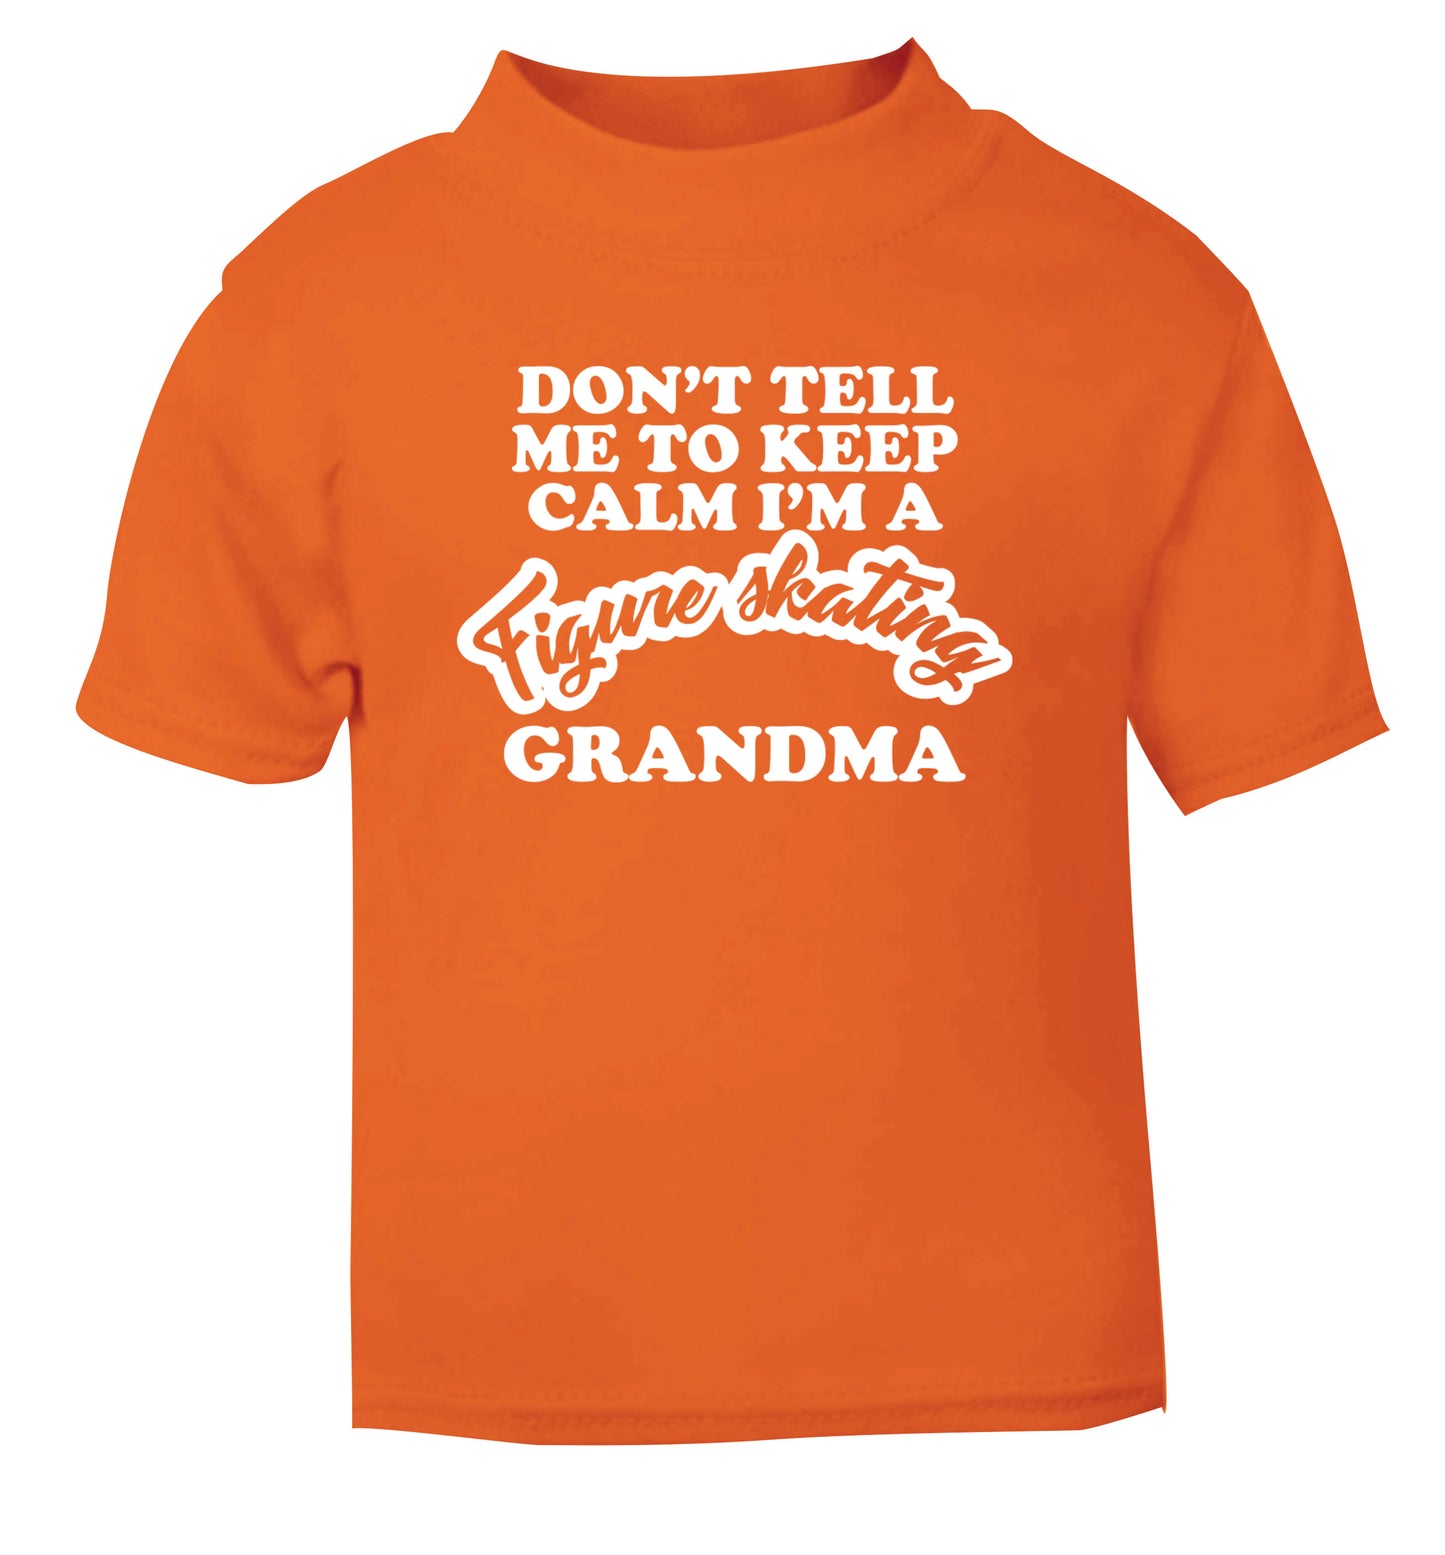 Don't tell me to keep calm I'm a figure skating grandma orange Baby Toddler Tshirt 2 Years